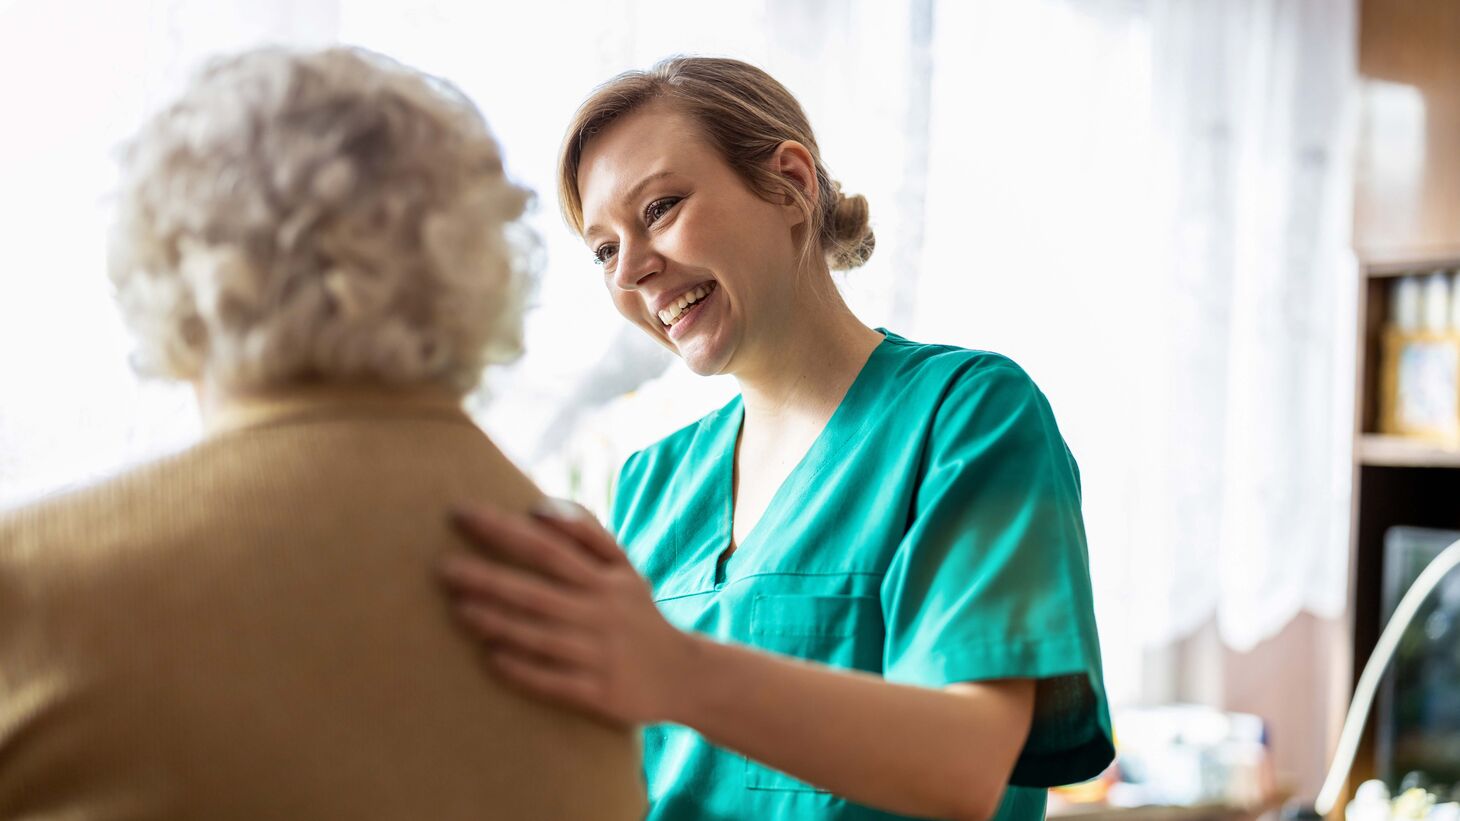 Friendly nurse supporting an elderly woman